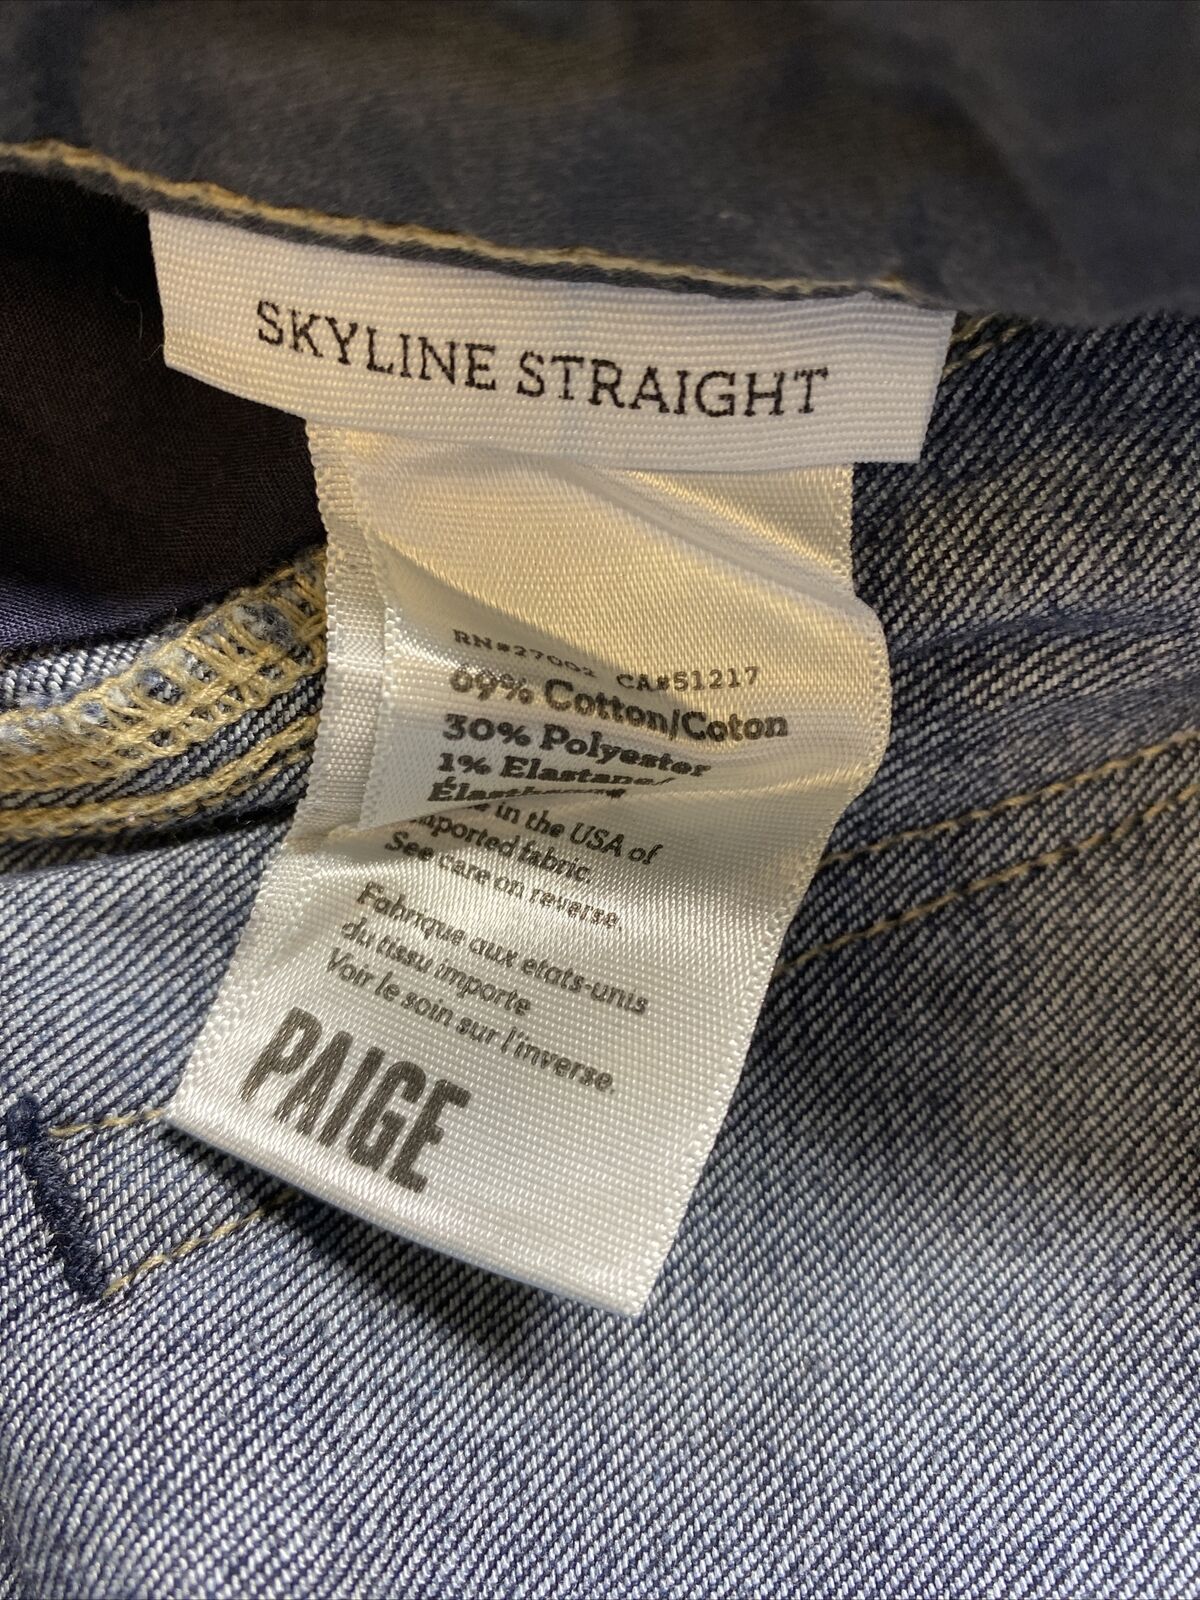 Paige Women's Dark Wash Stretch Skyline Straight Denim Jeans - 27